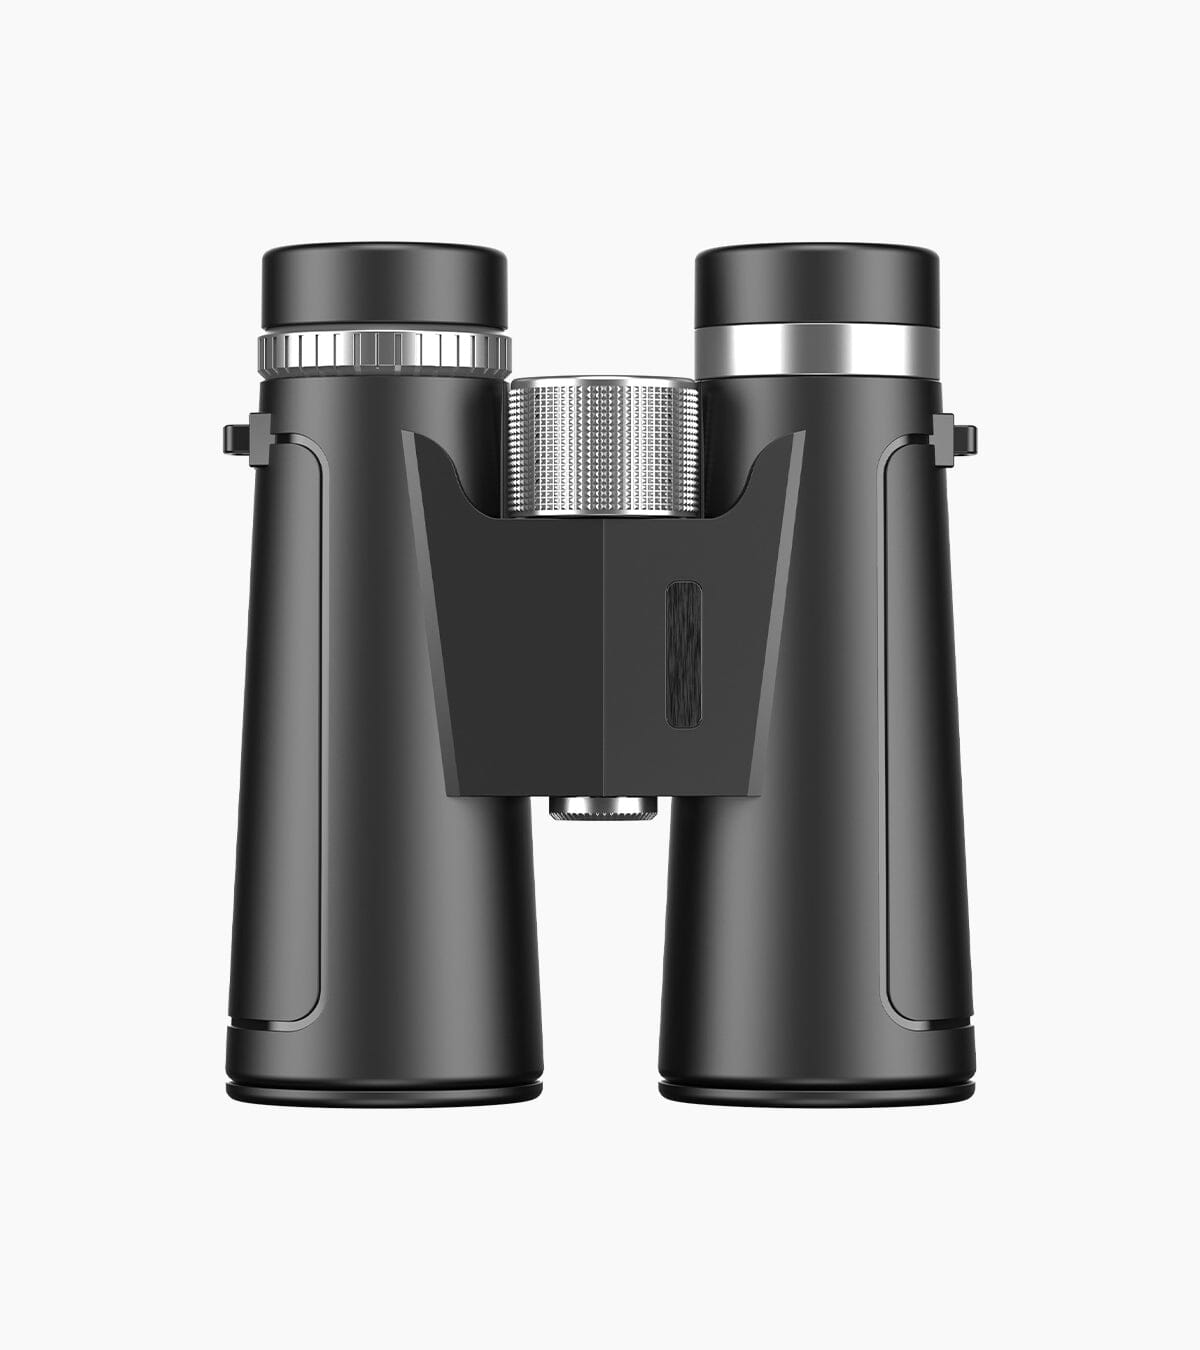 12x42 Powerful Binoculars with Clear Weak Light Vision APEXEL 